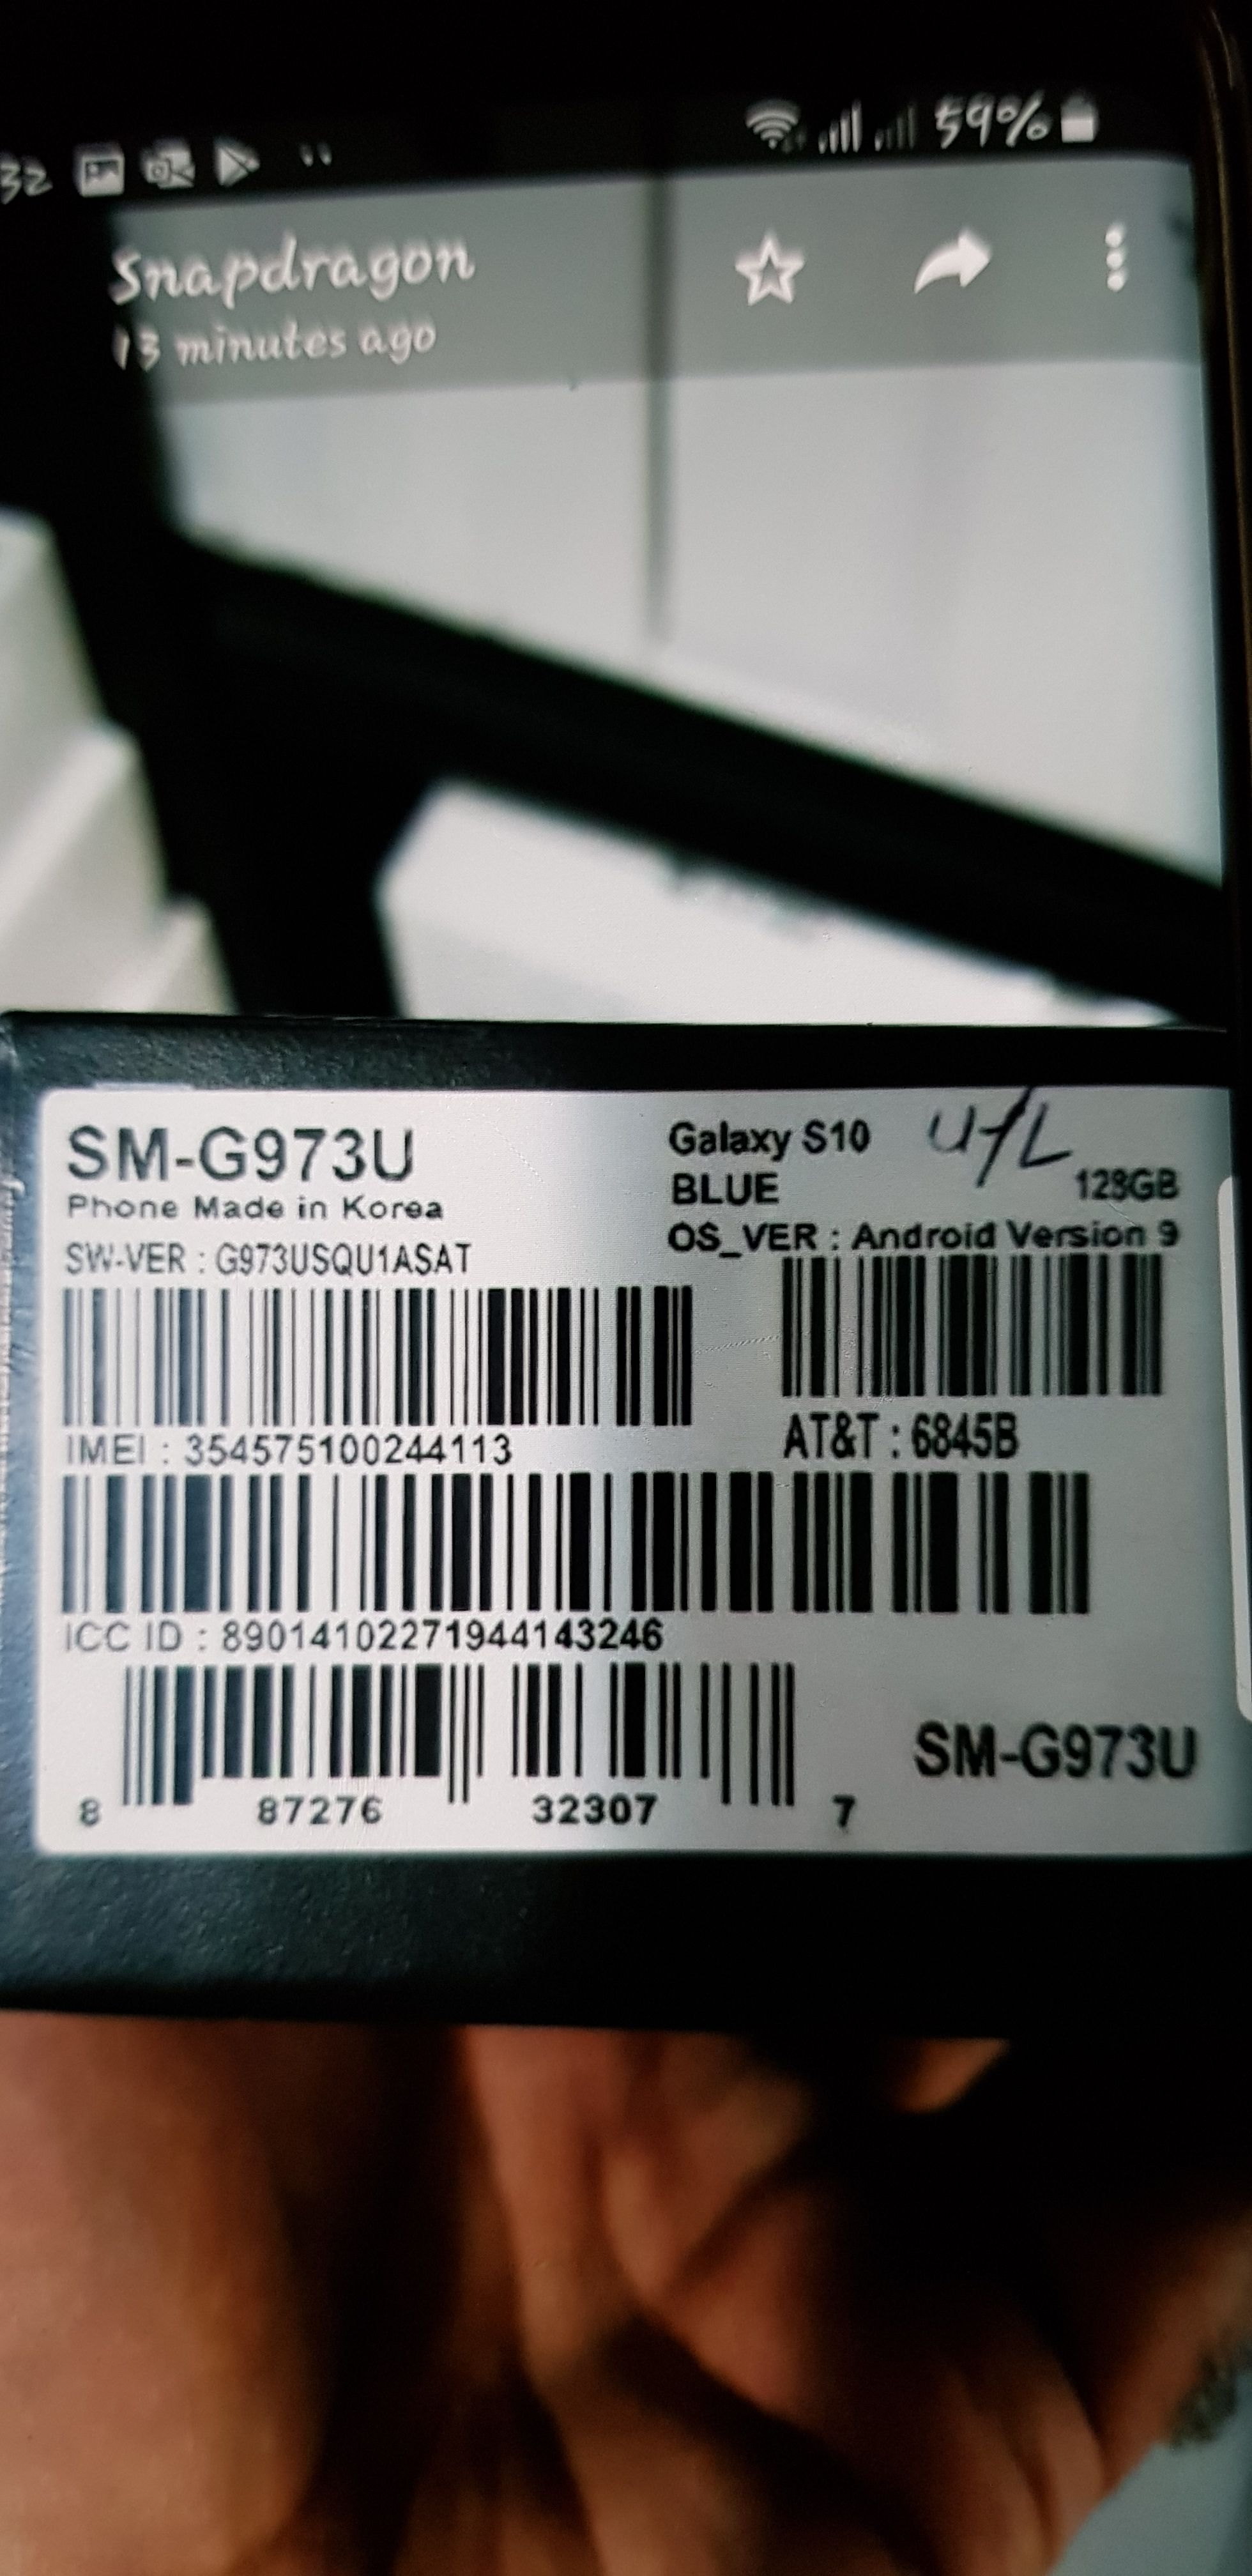 Samsung Galaxy S10 Plus Global Version Snapdragon 855 Europe Samsung Community